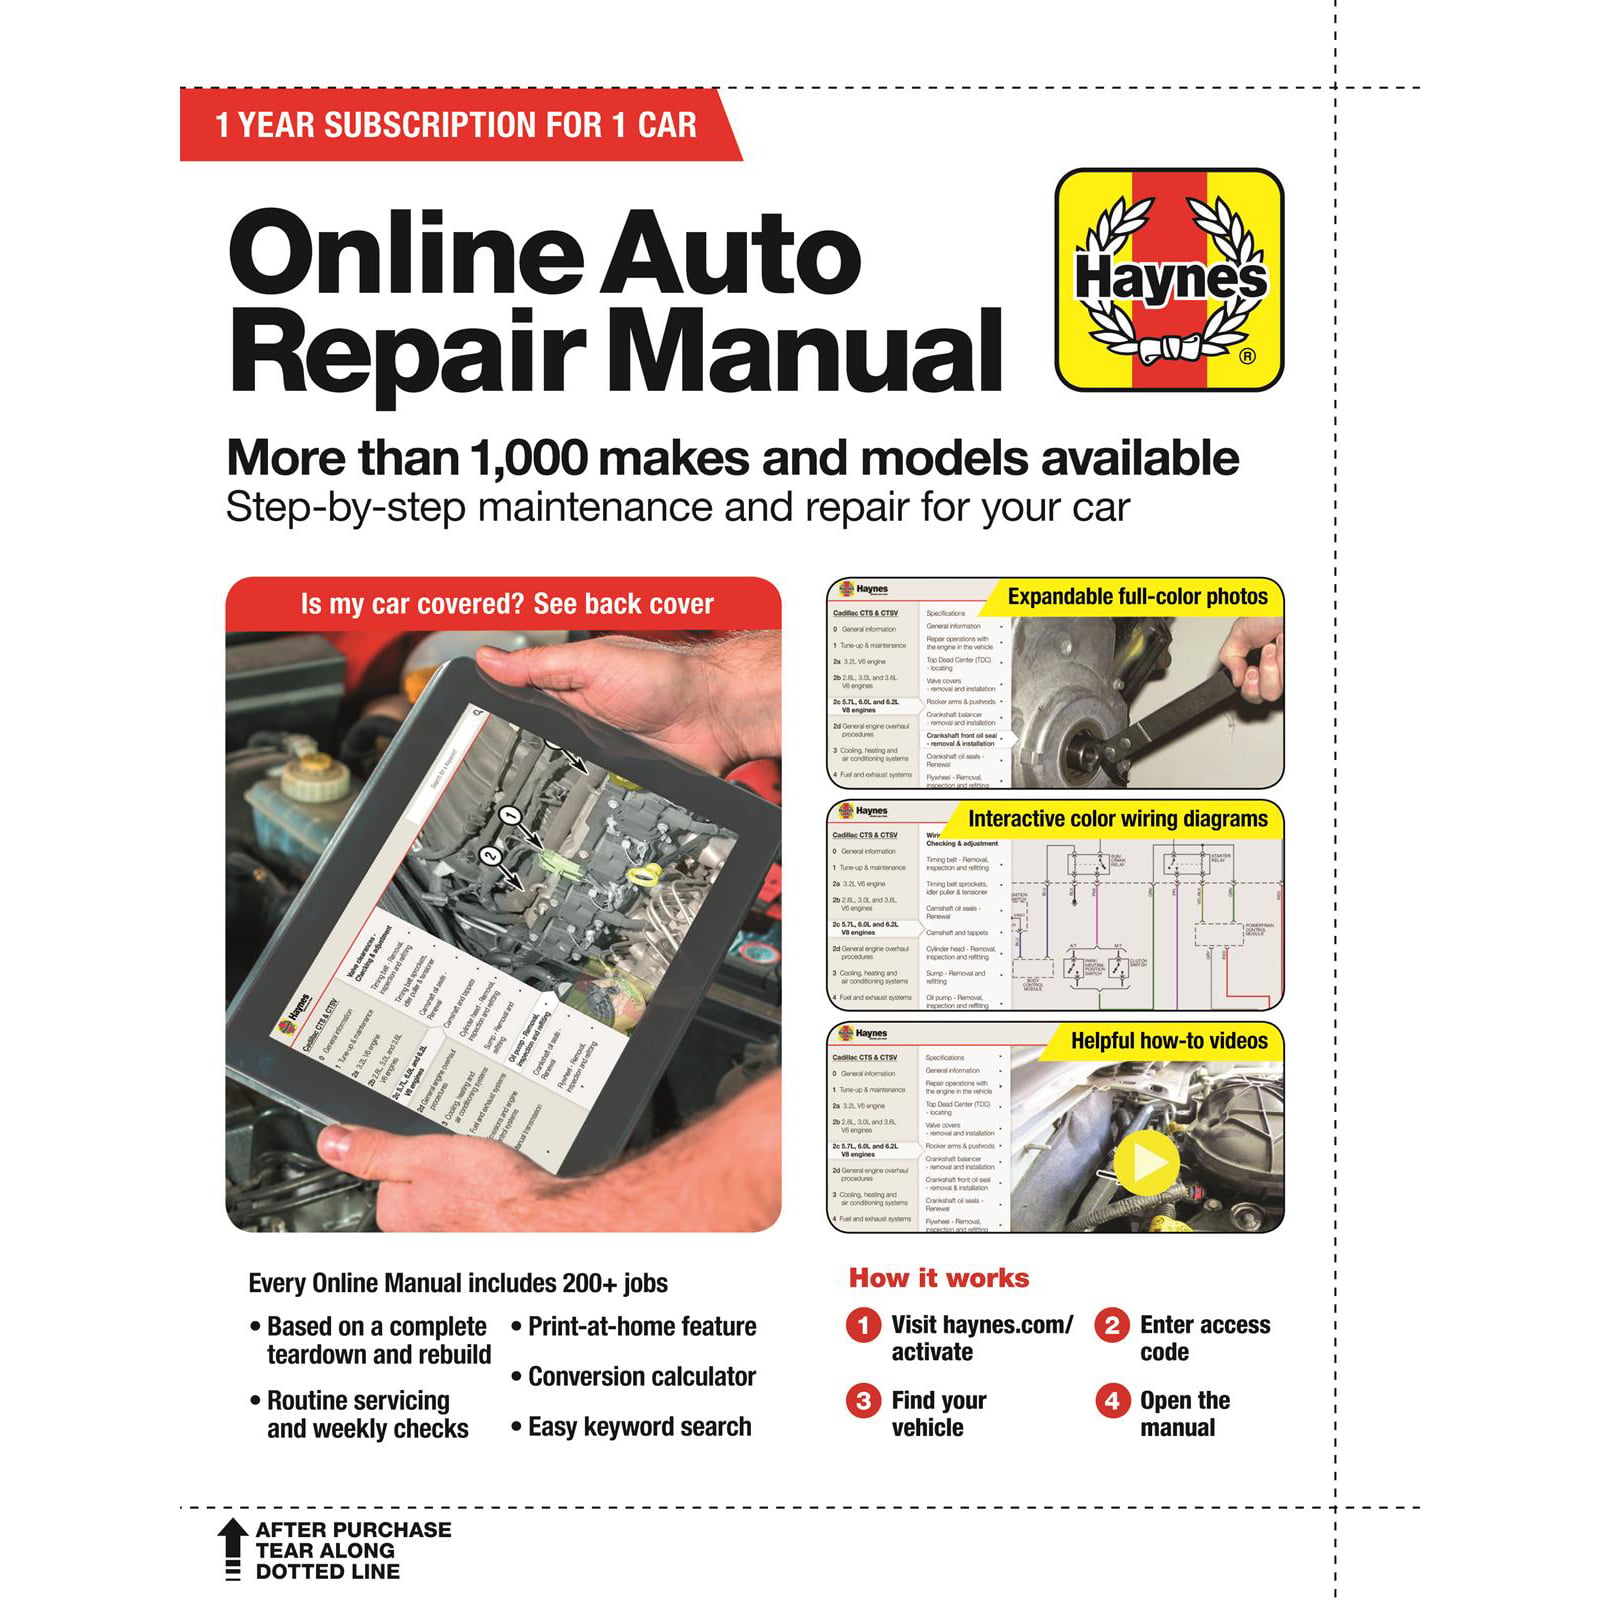 Haynes Manual EAC1111 Car Maintenance Online Auto Repair Manual Access